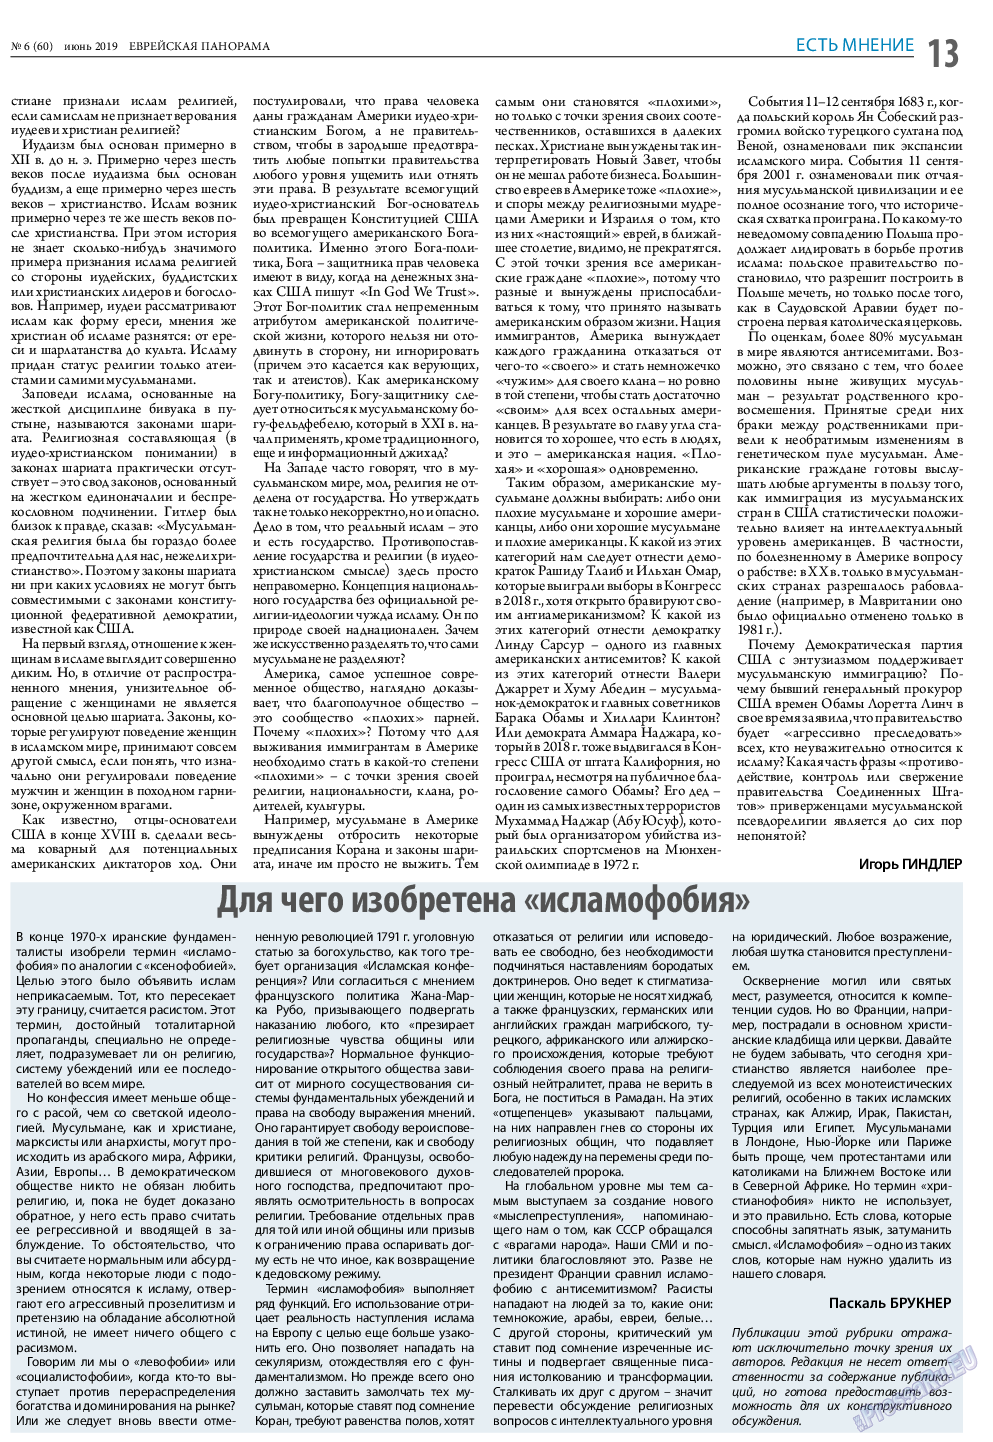 Еврейская панорама, газета. 2019 №6 стр.13